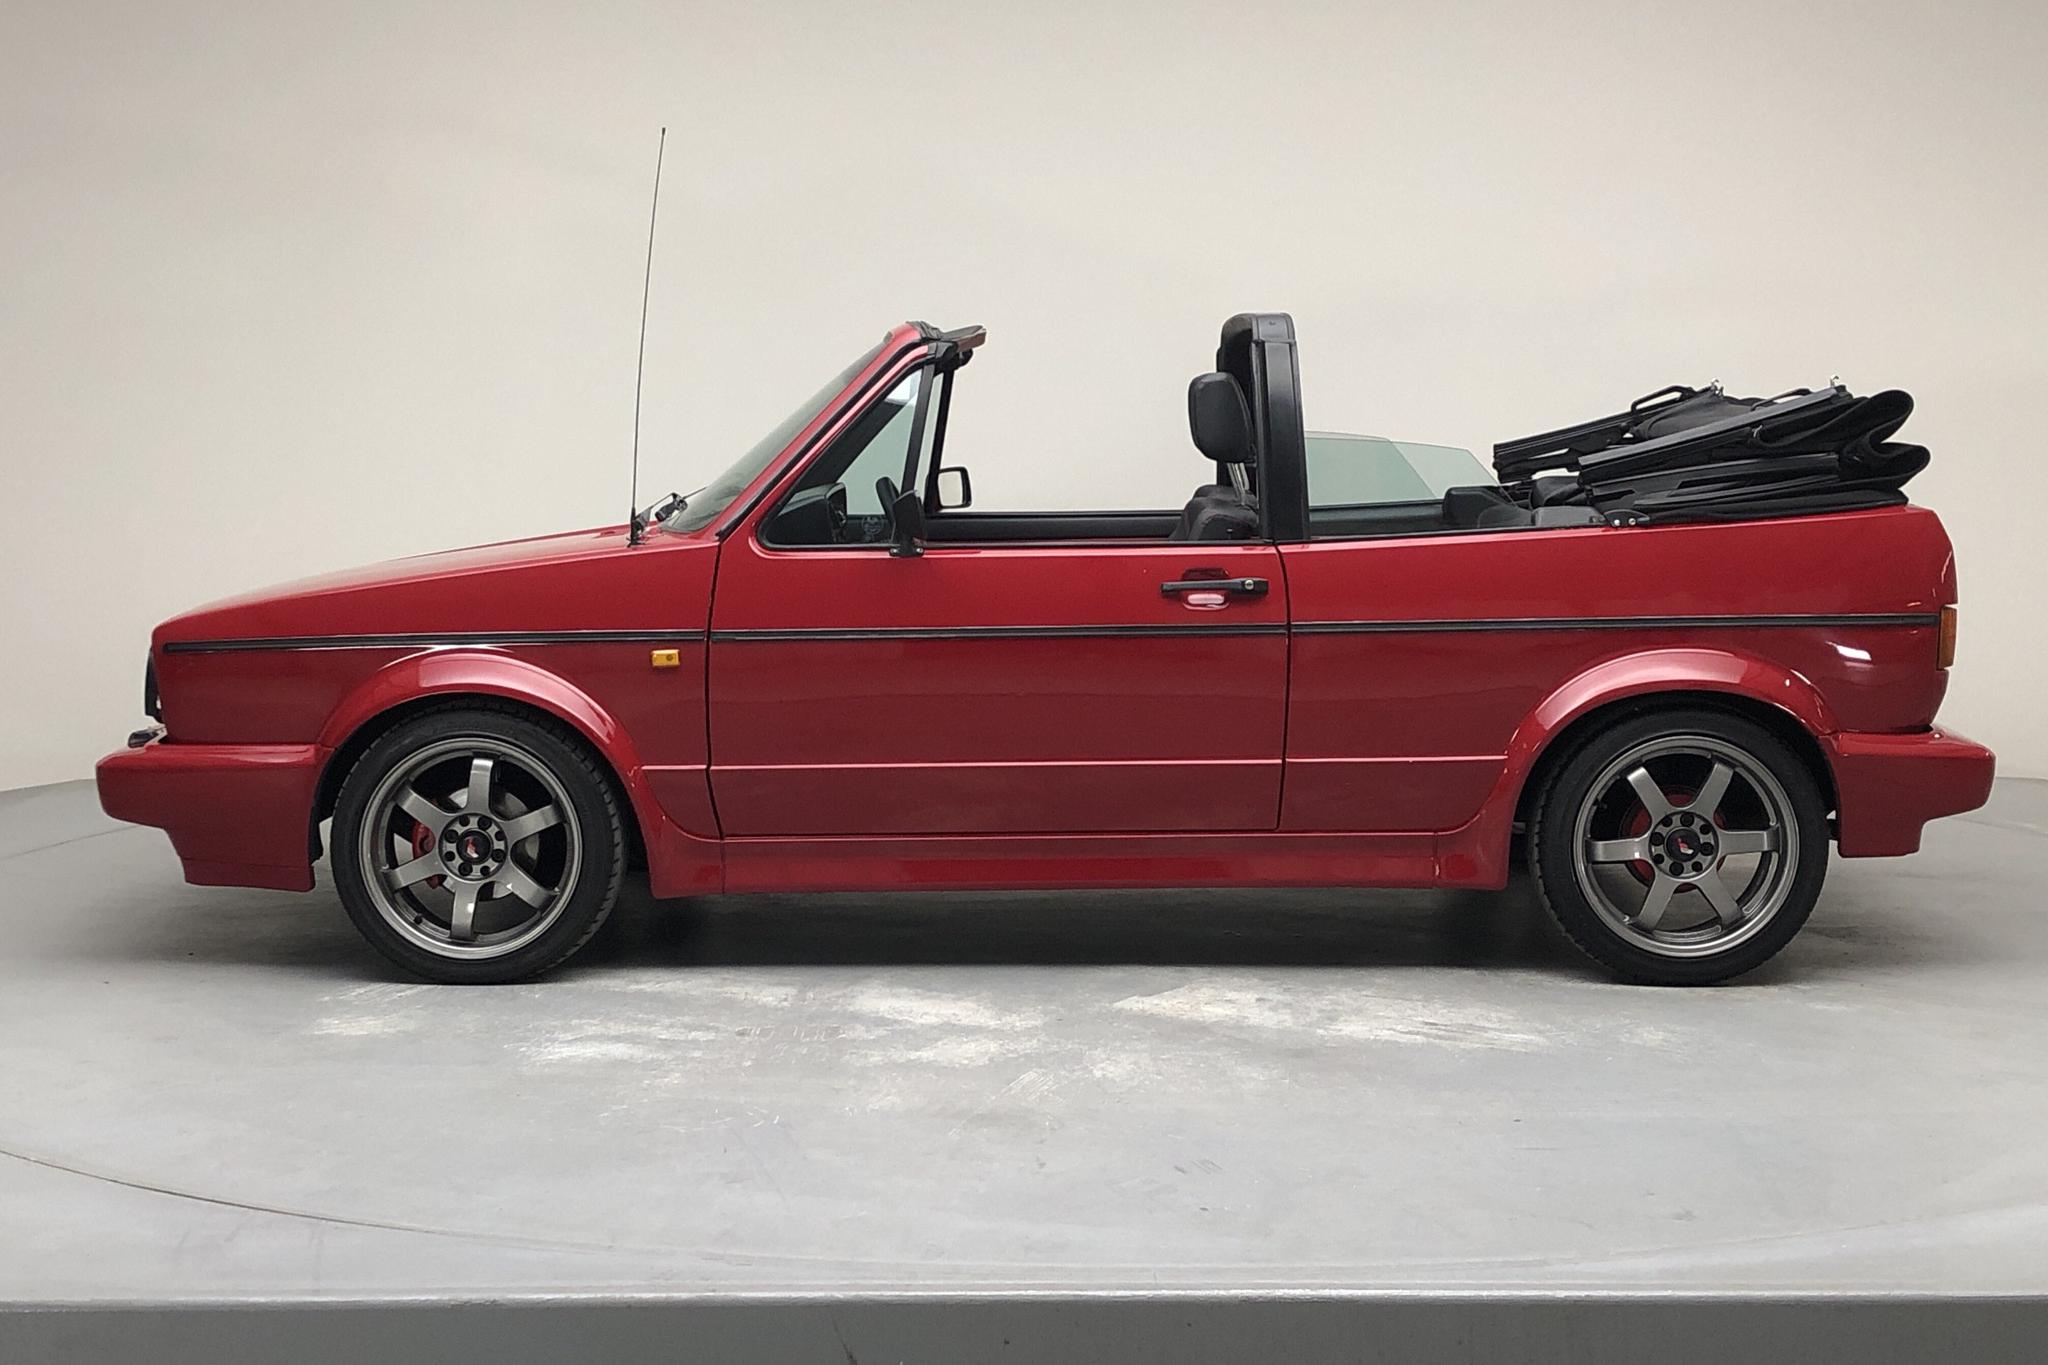 VW Golf Cabriolet 1.8 (98hk) - 231 380 km - Manual - red - 1989